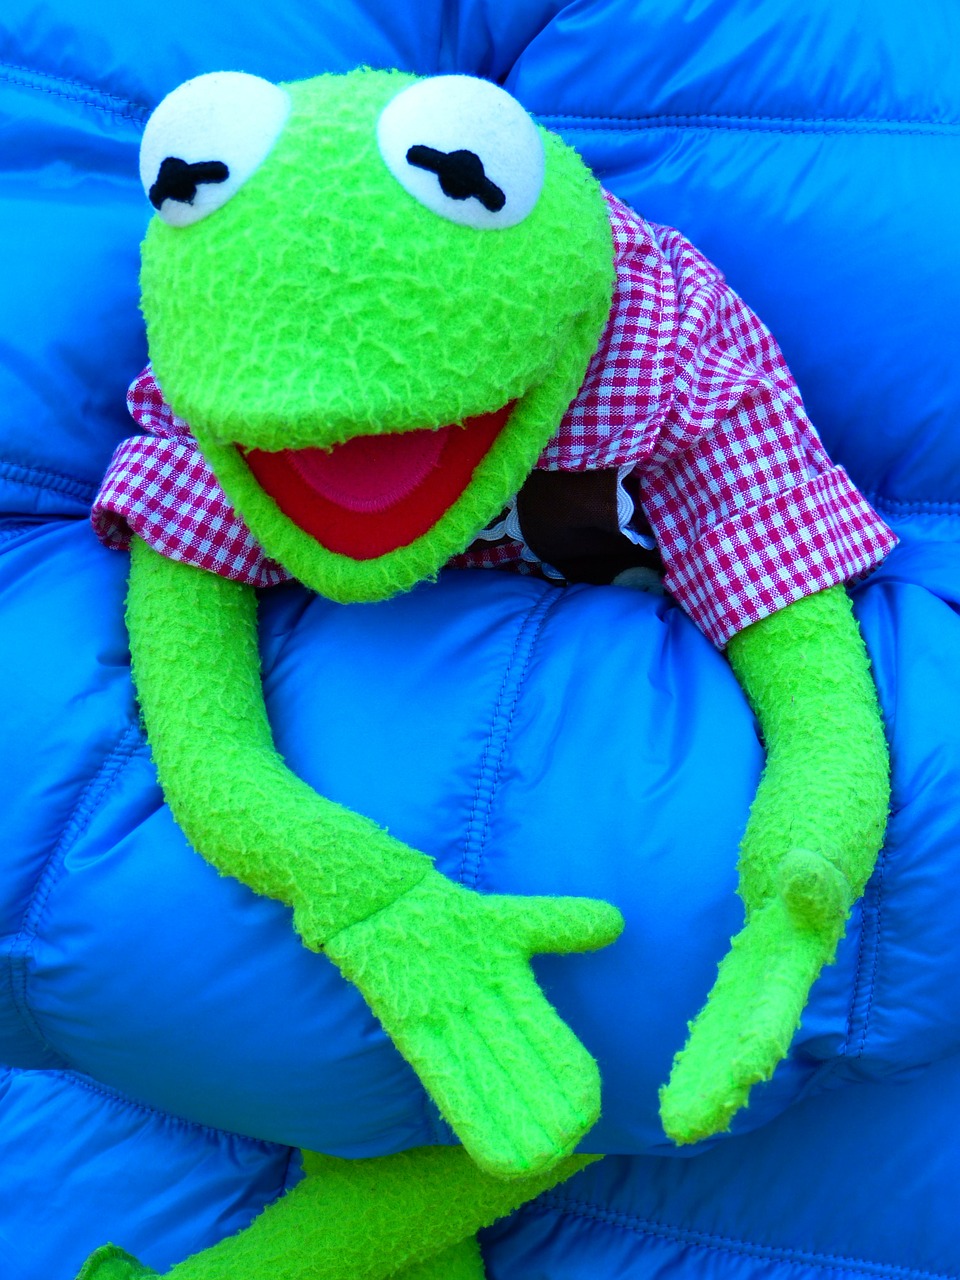 kermit frog doll free photo